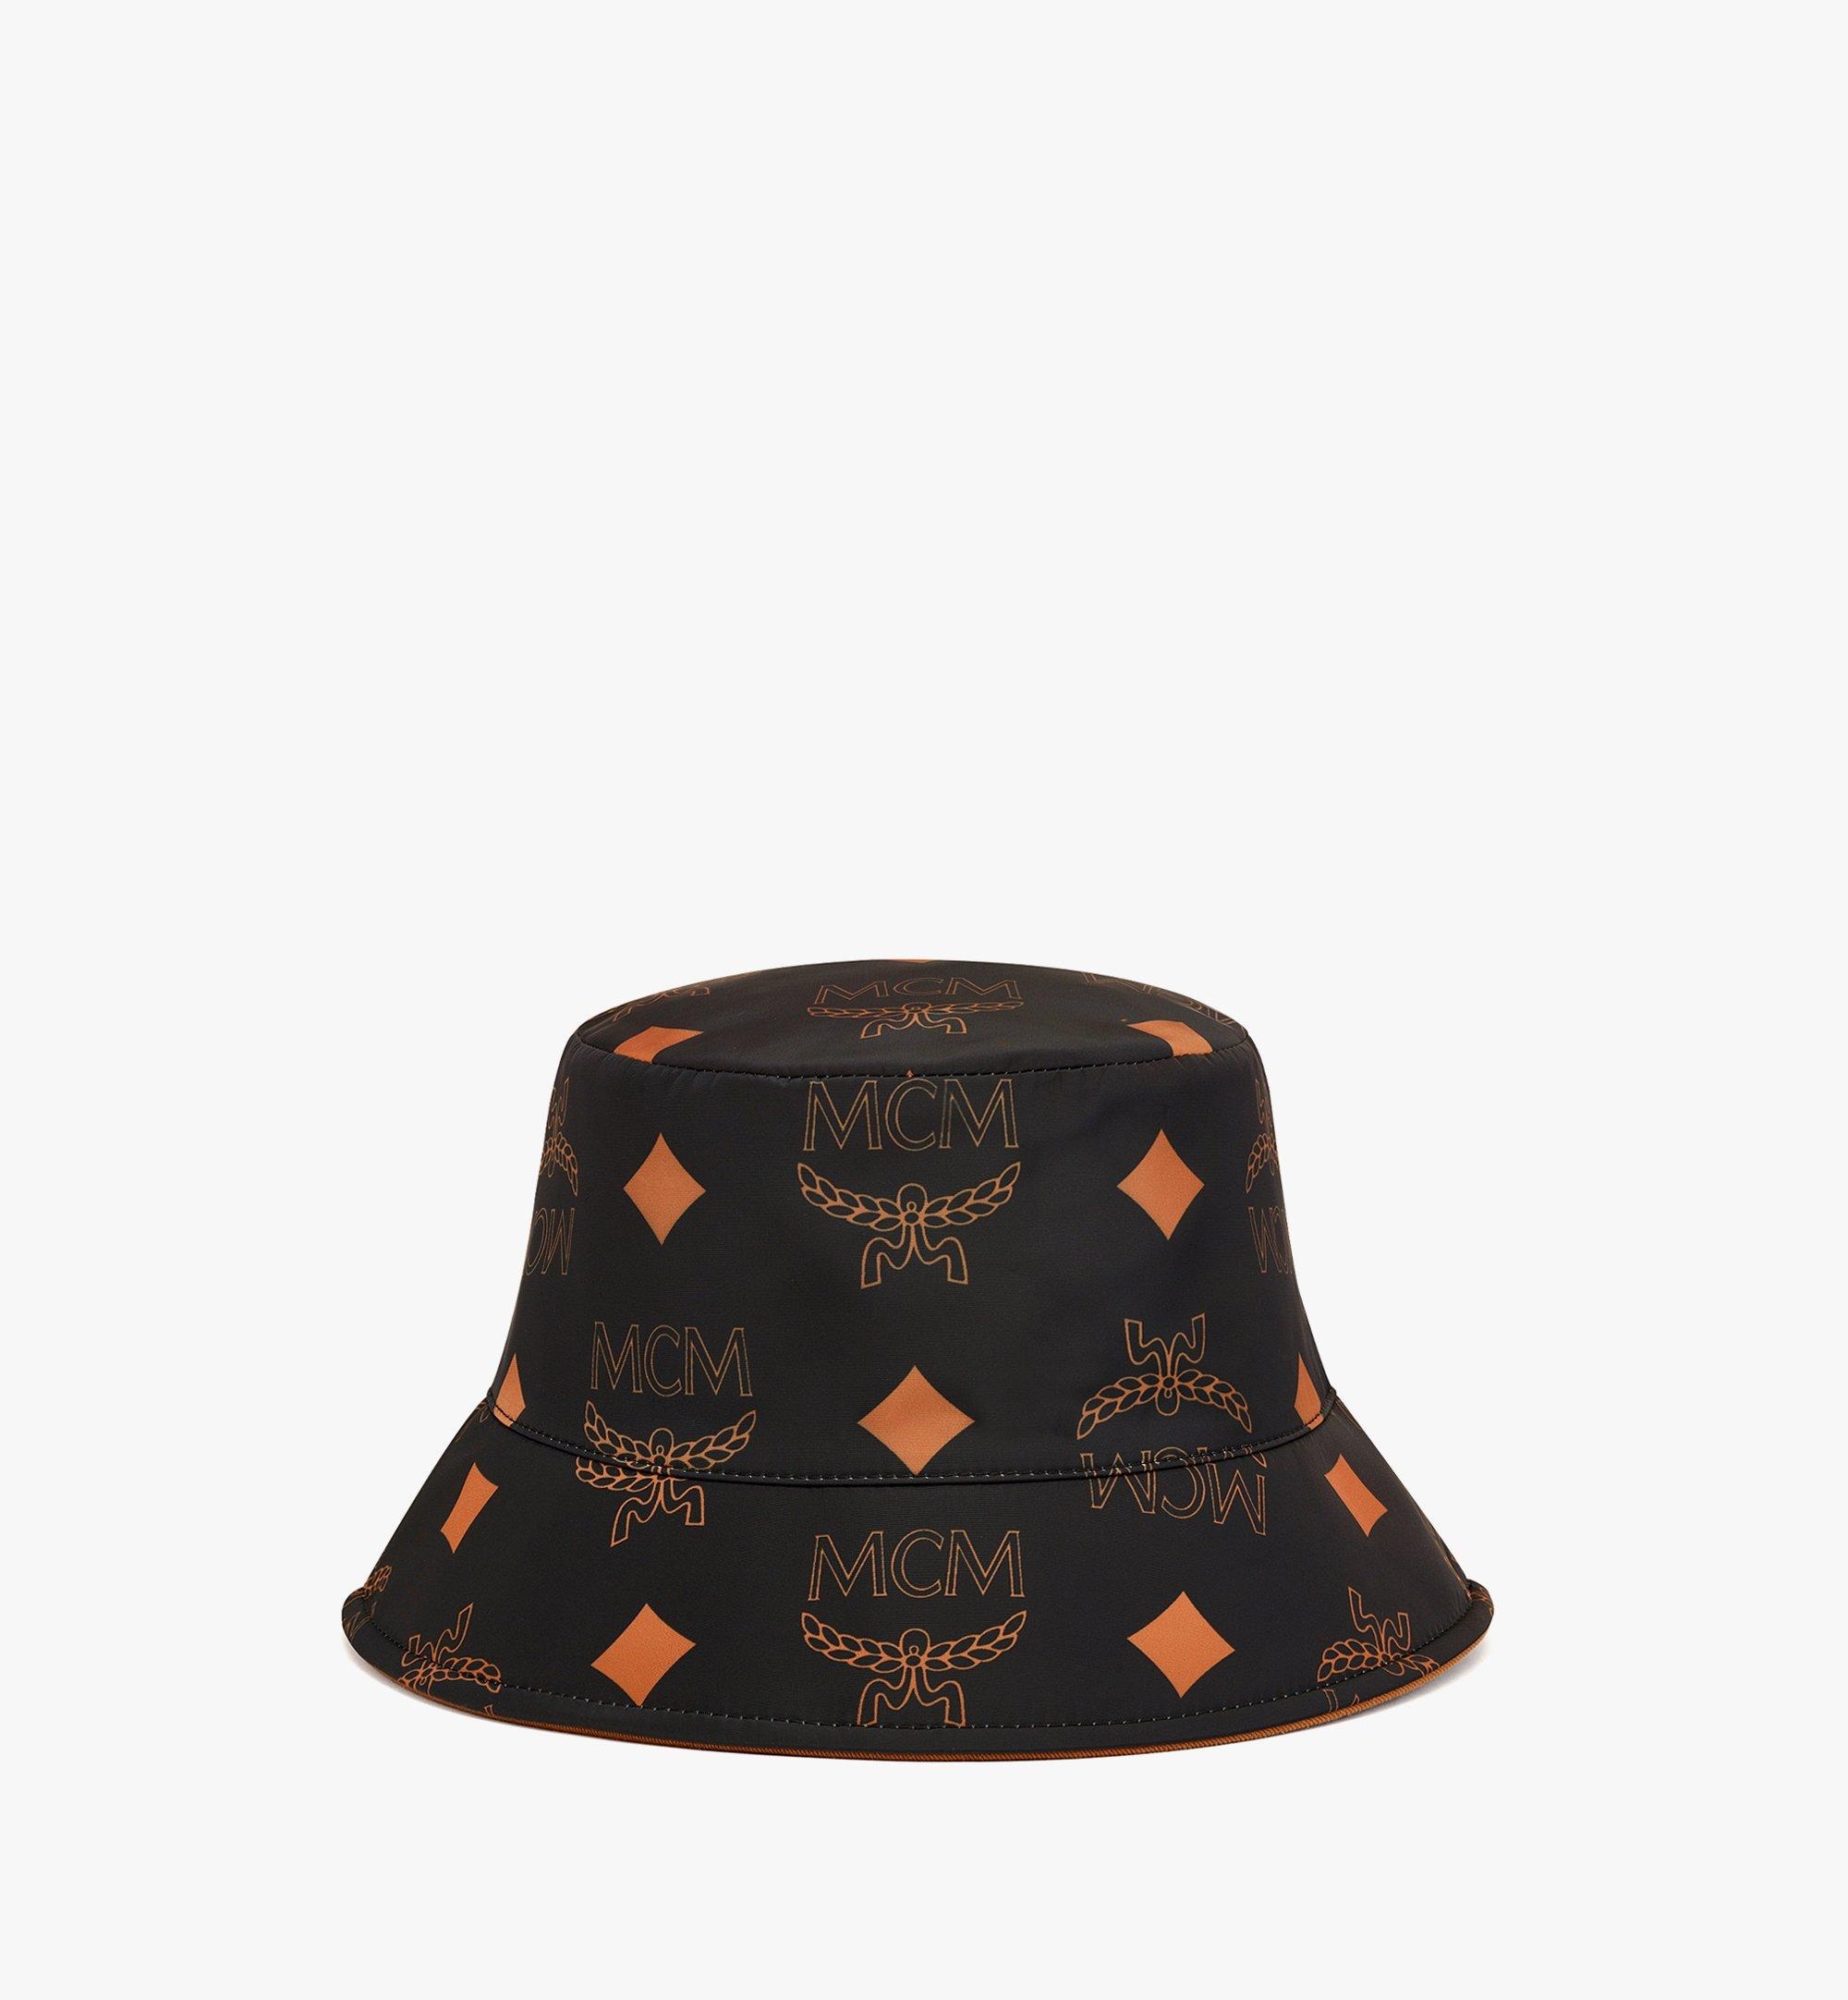 Mcm Women's Visetos Monogram Headband - Cognac - Cognac